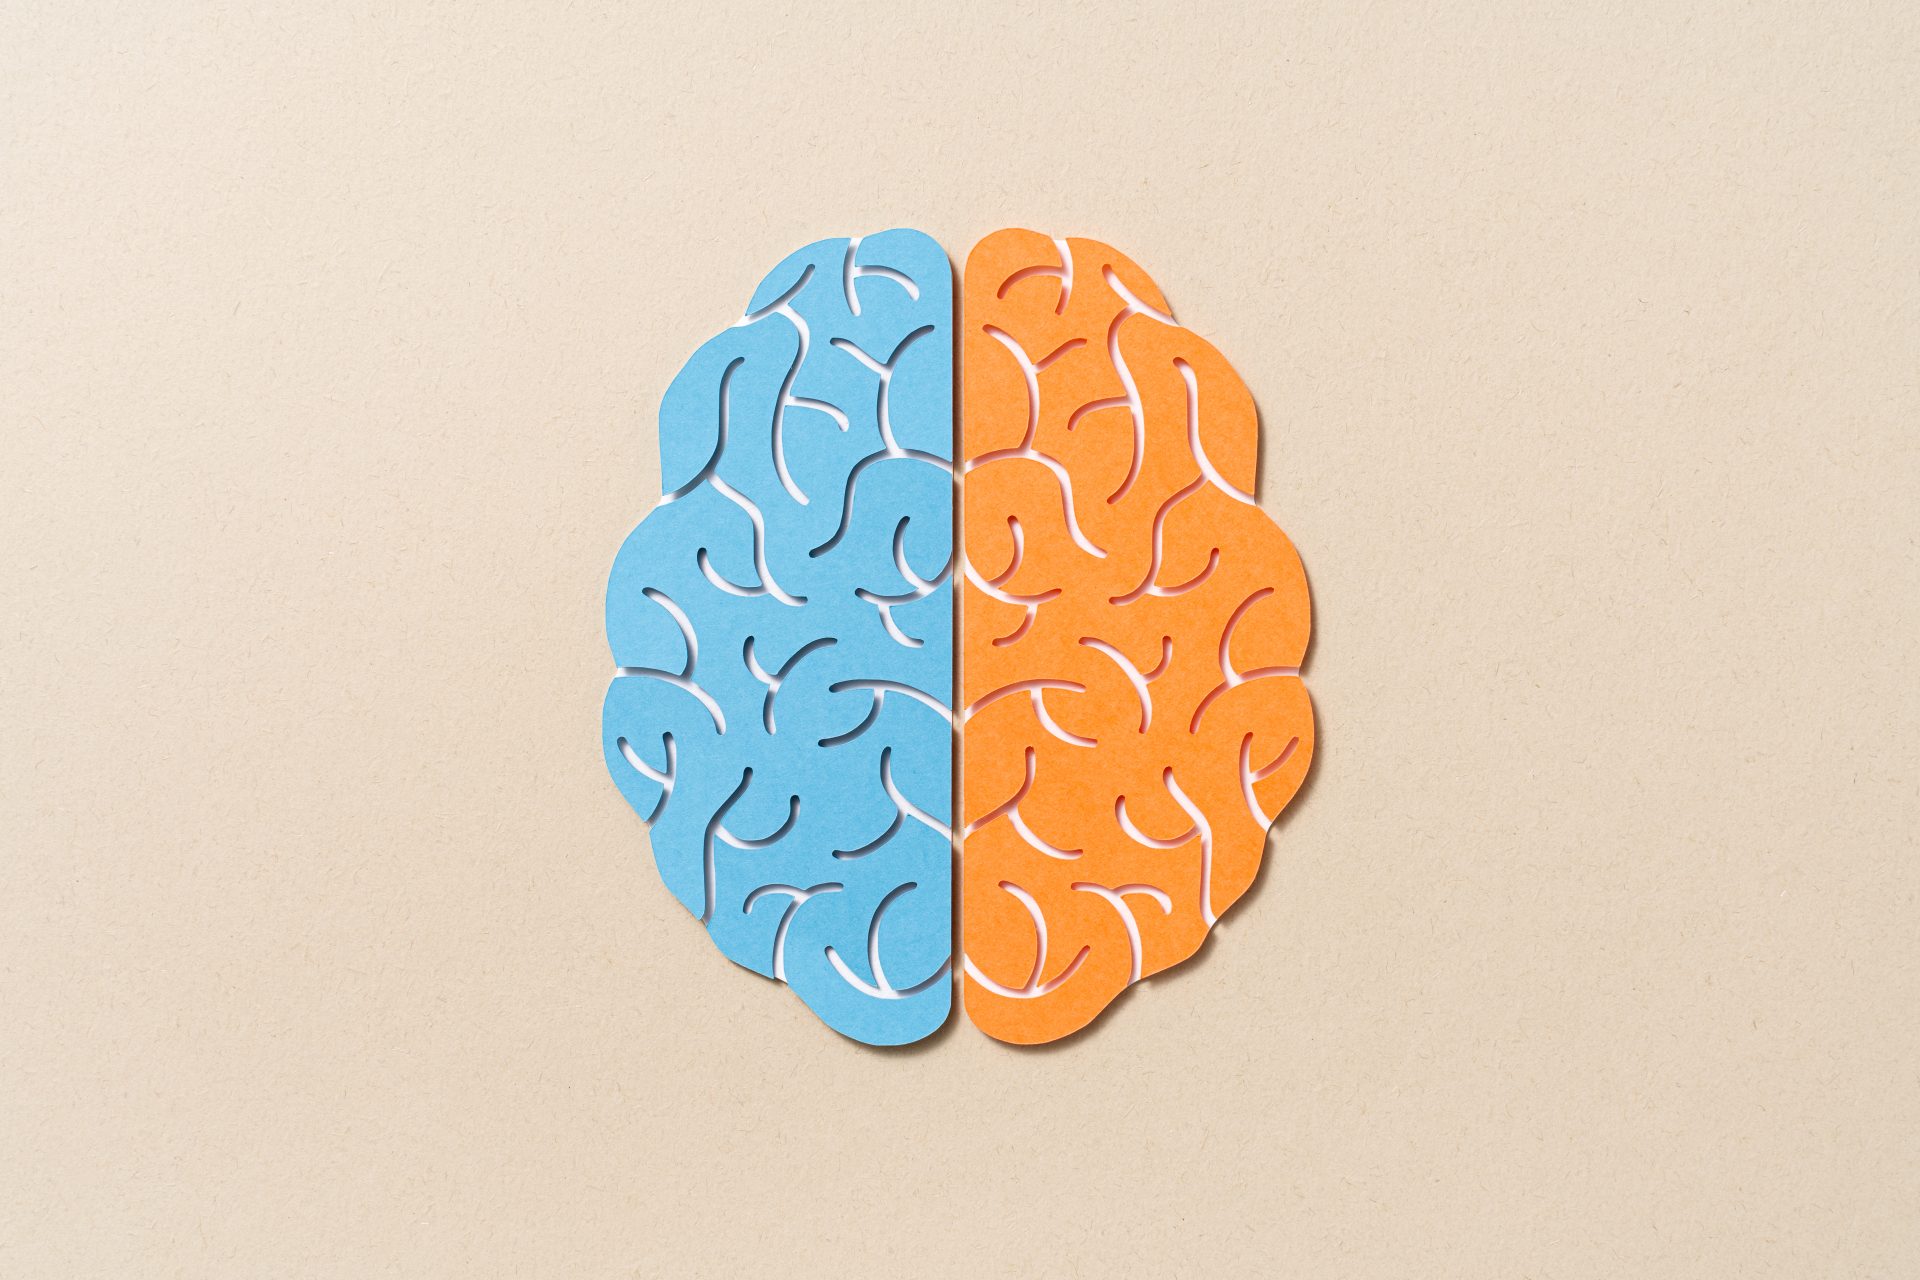 The two hemispheres of the brain